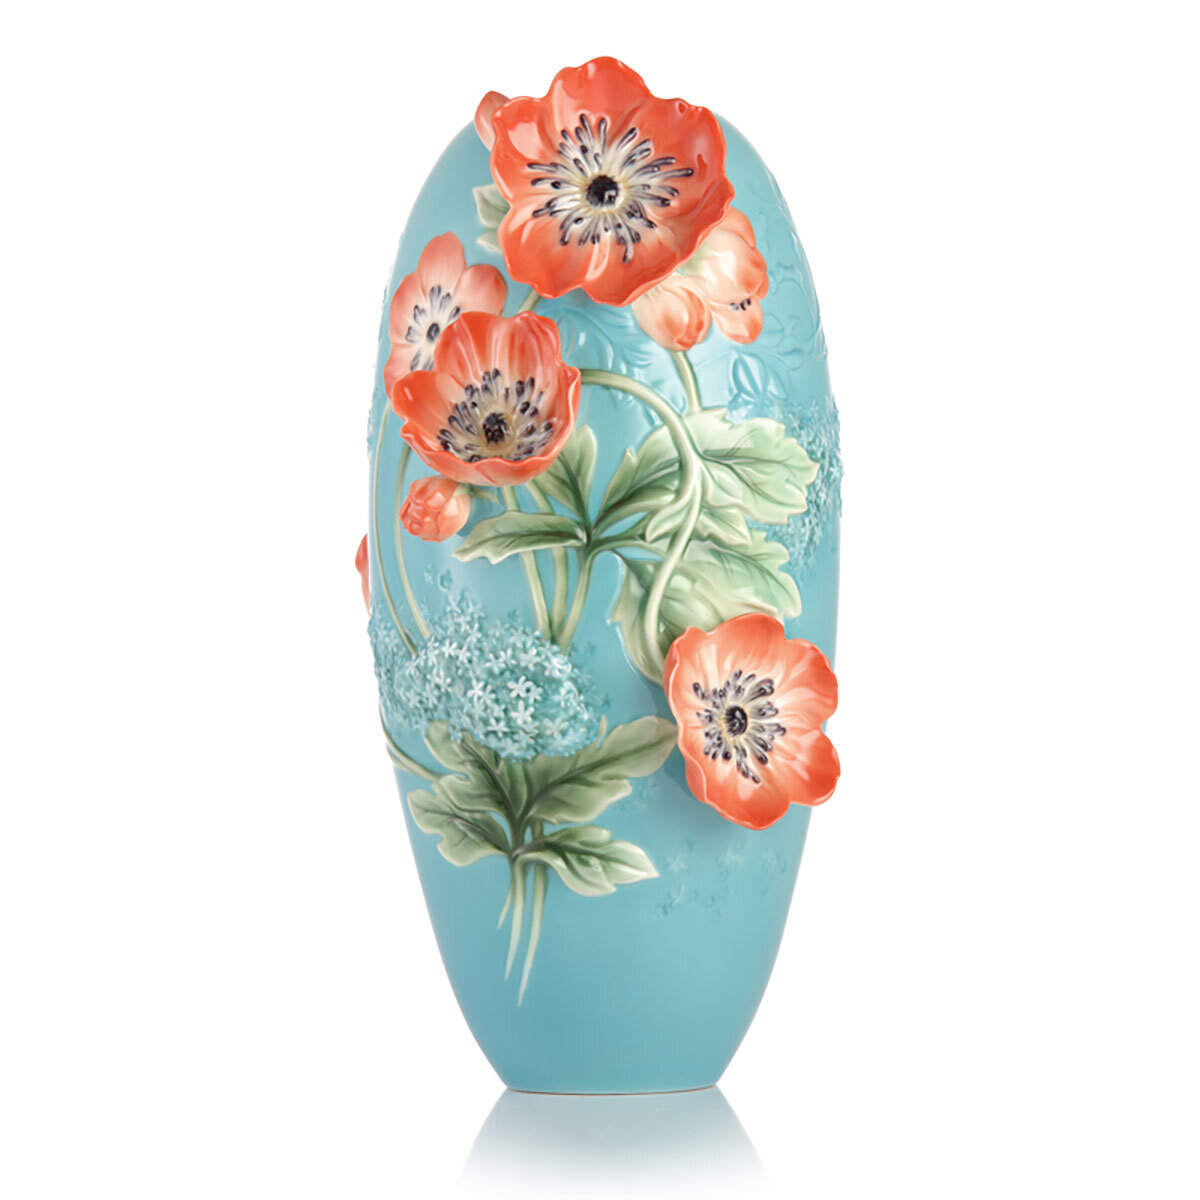 Franz Porcelain Love and Hope Anemone Flower FZ03119